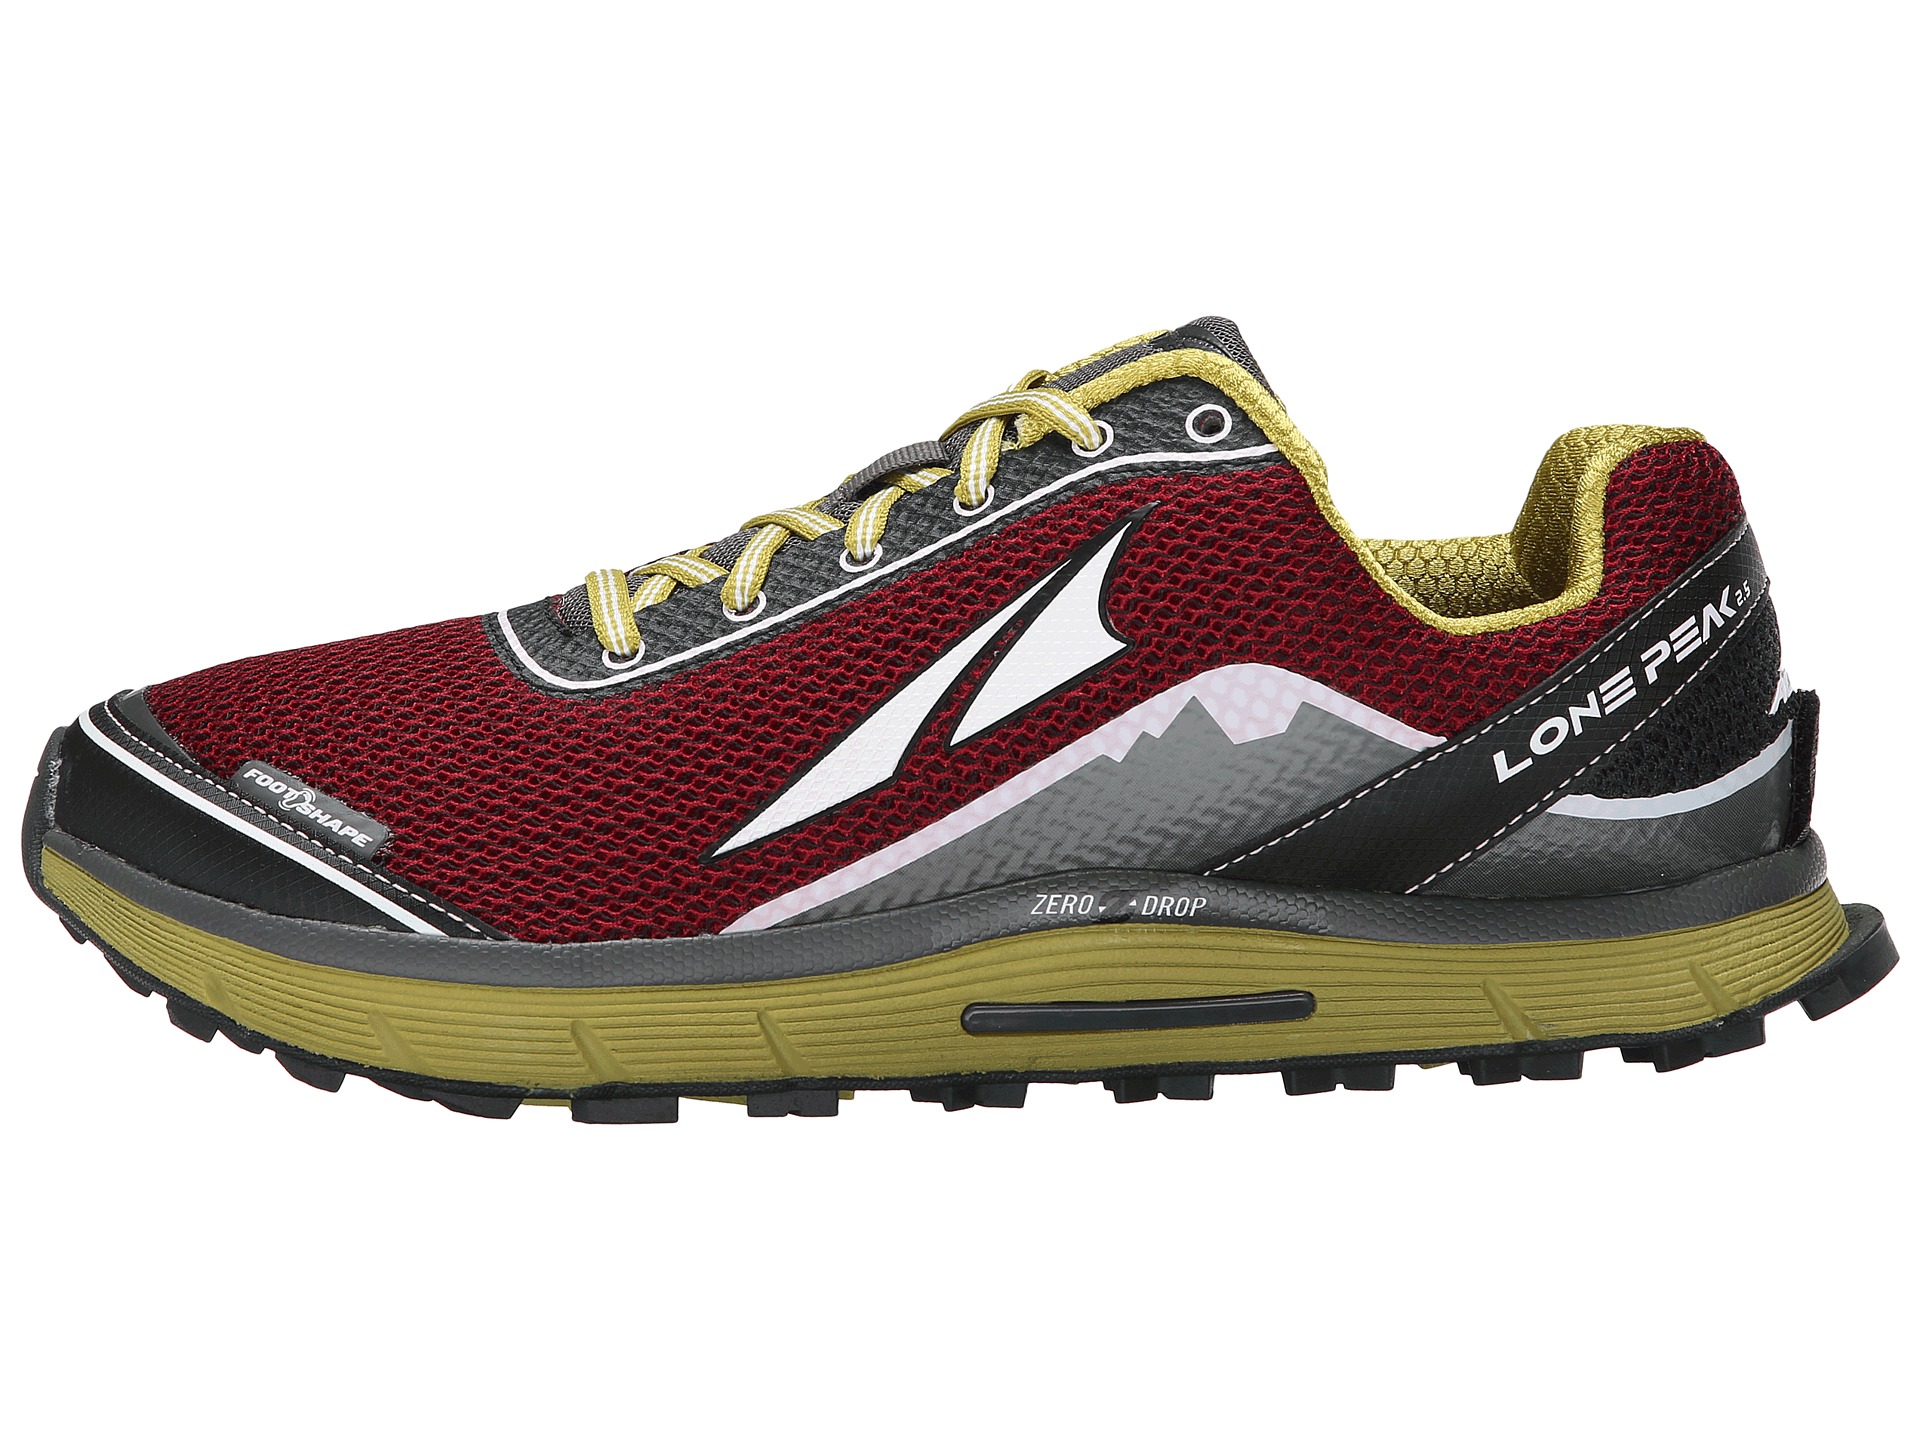 Altra Zero Drop Footwear Lone Peak 2.5 Rio Red - Zappos.com Free ...